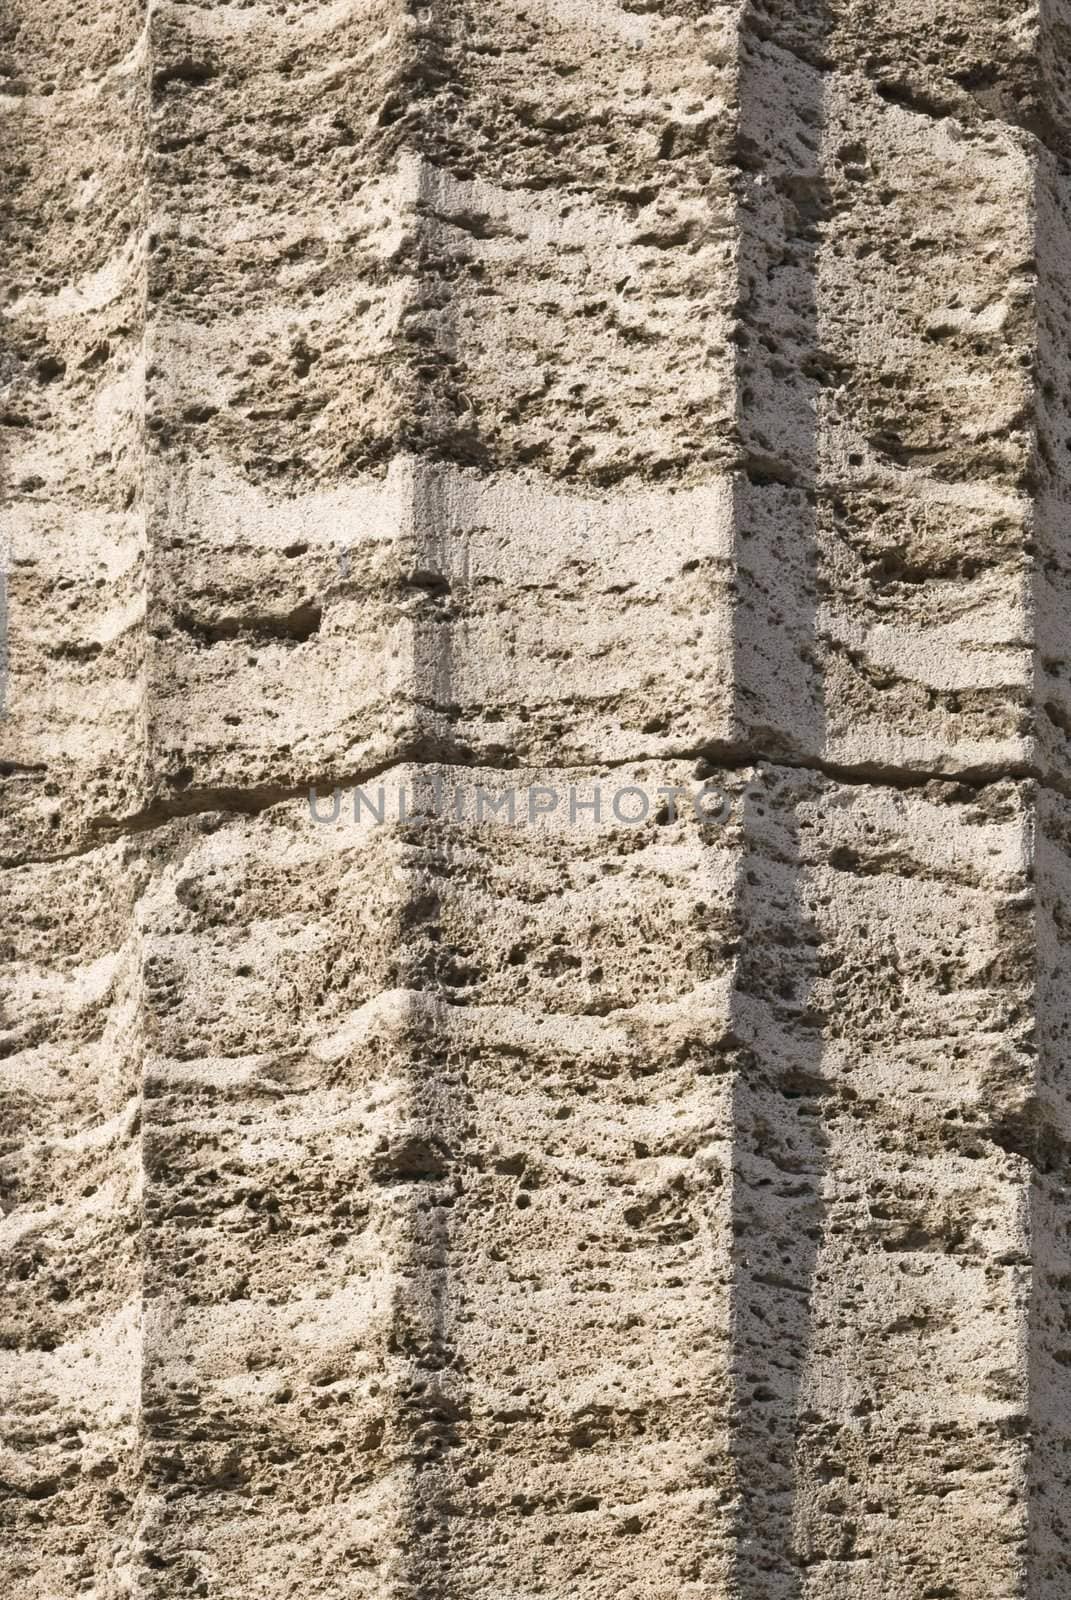 Close-up of an ancient column, texture